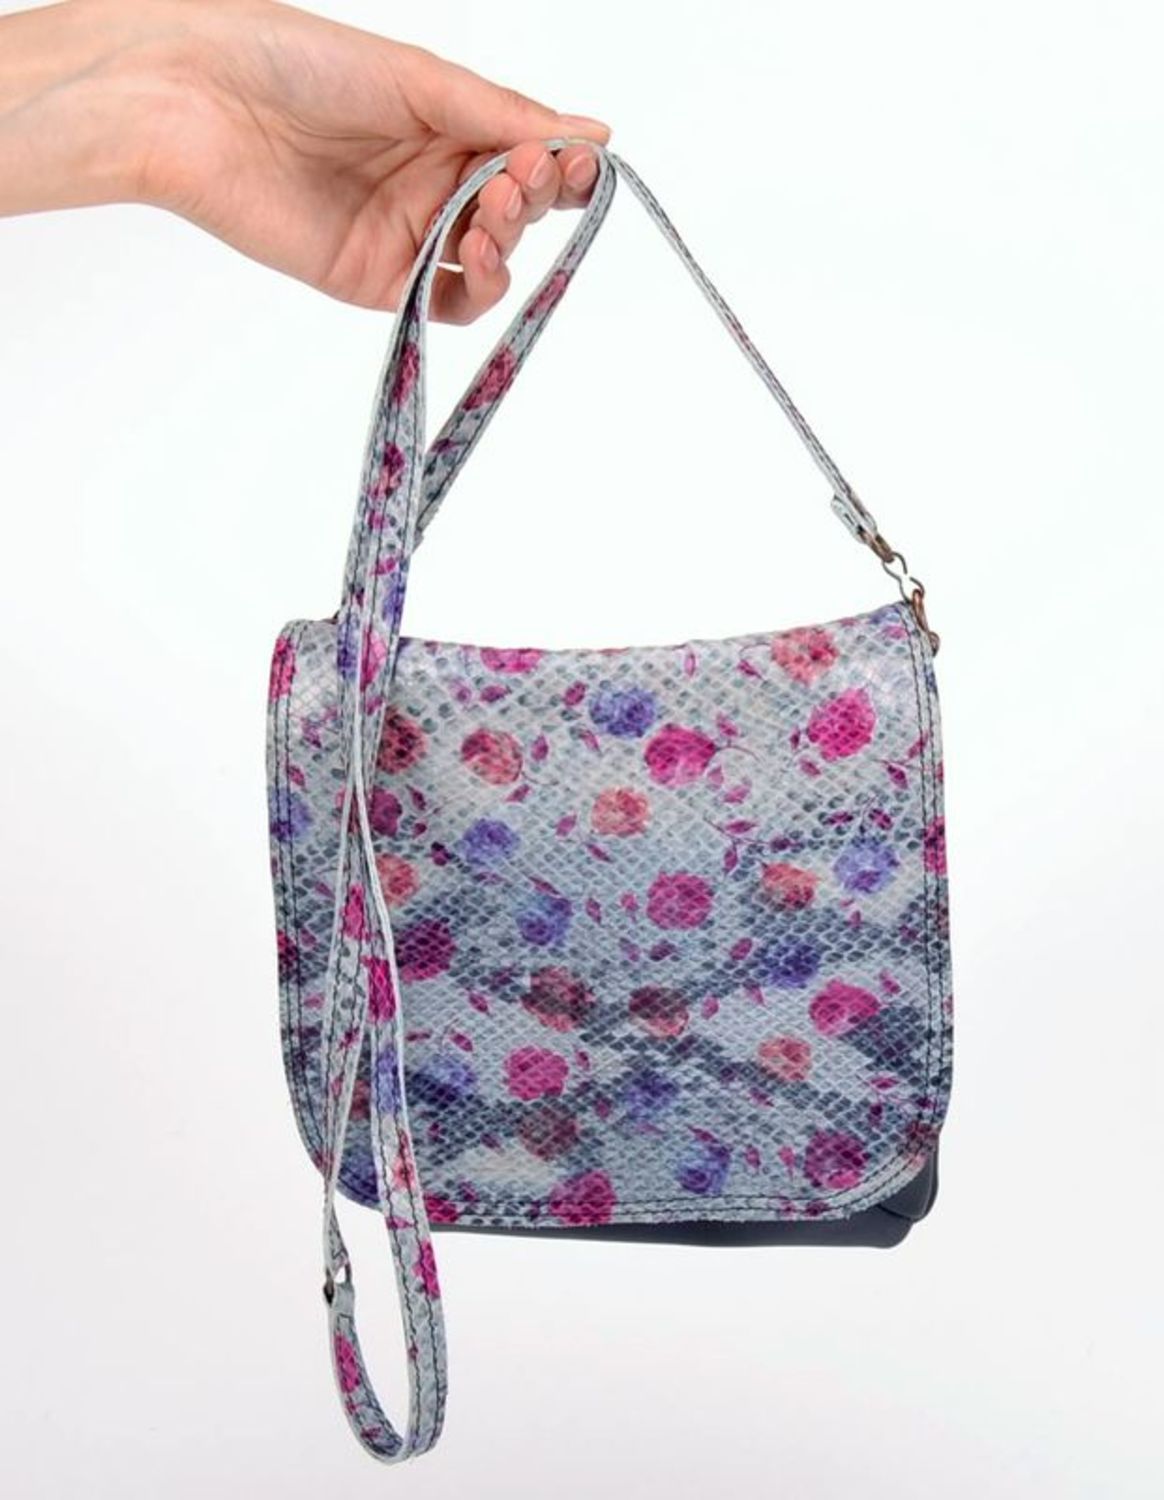 Bolsa de couro com estampa floral foto 3